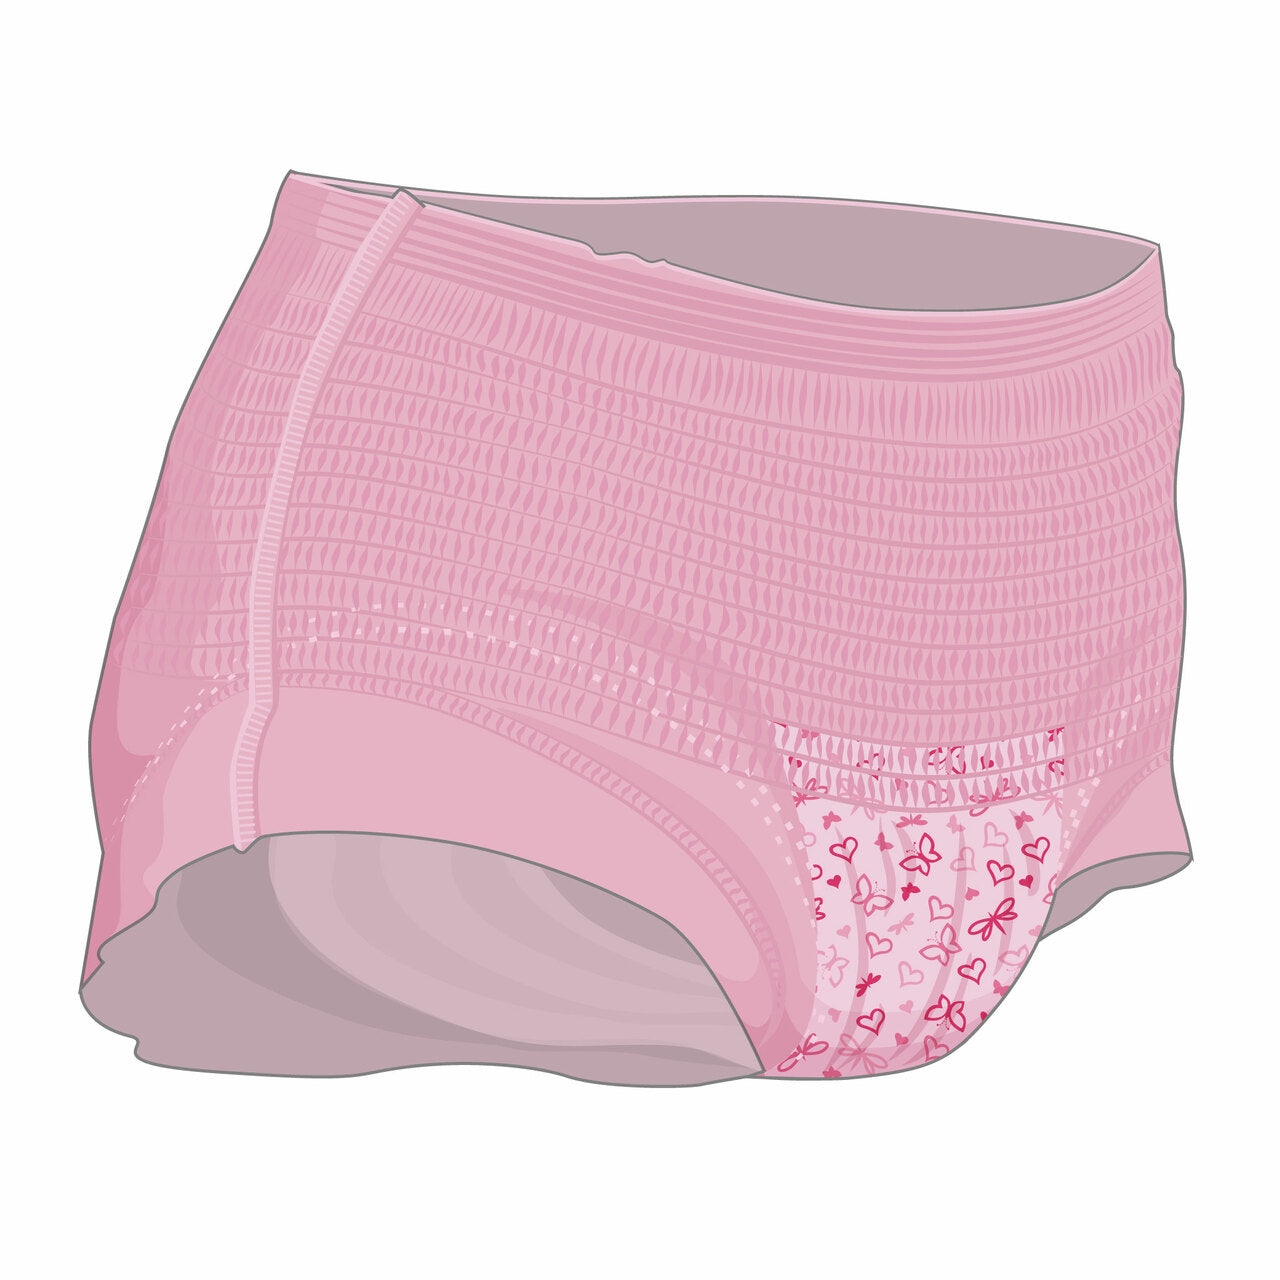 Felicity Super Absorbent Underwear – 9481-4886 Quebec Inc. PJN